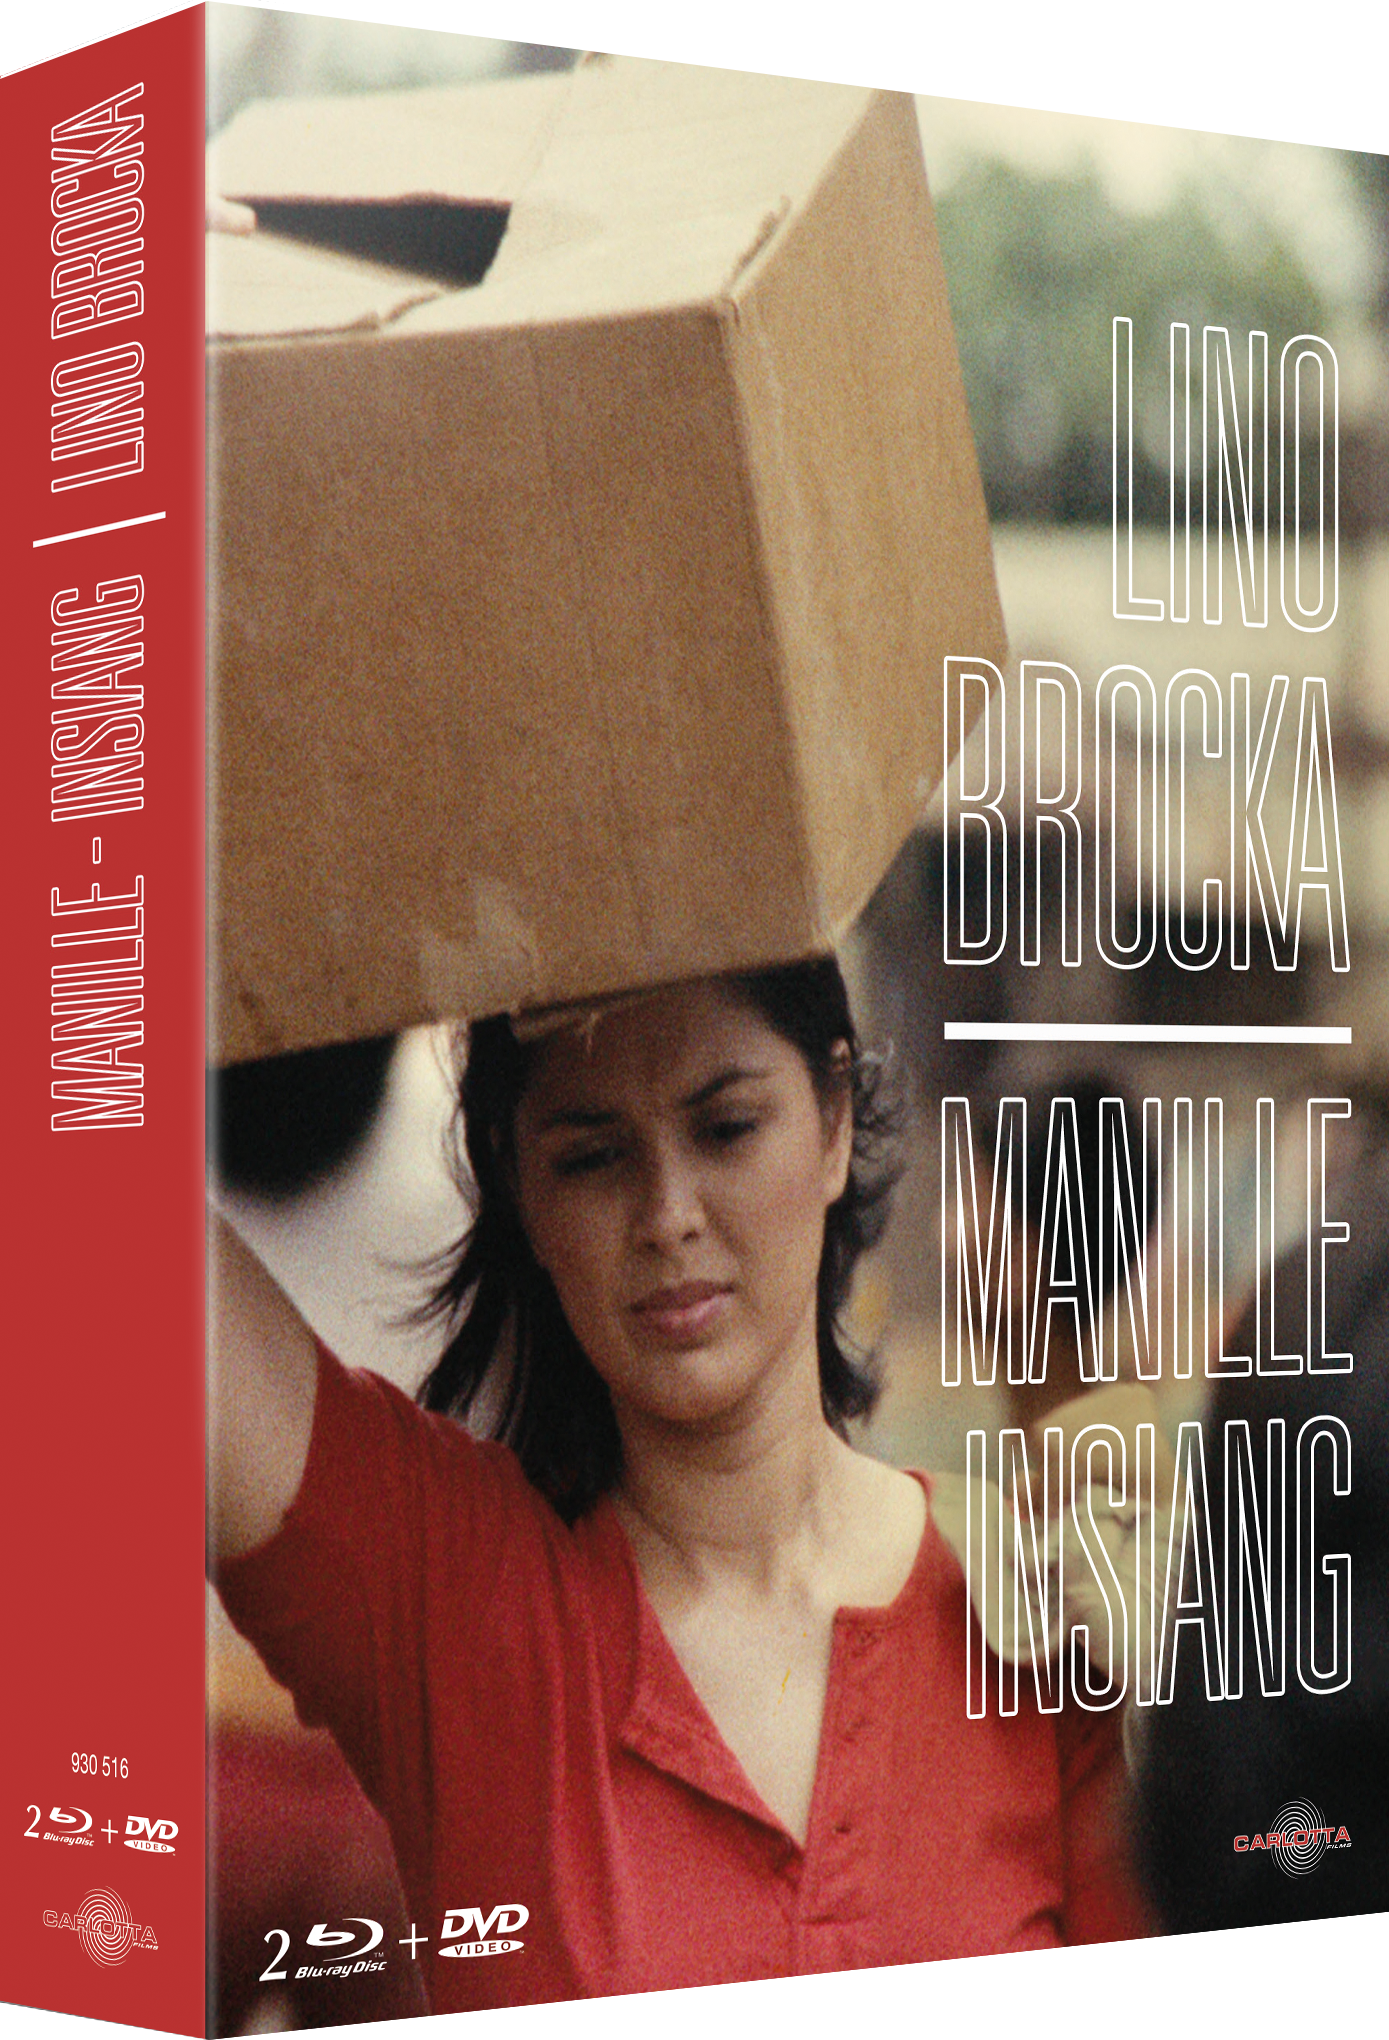 Insiang et Manille de Lino Brocka sortent en DVD chez Carlotta.